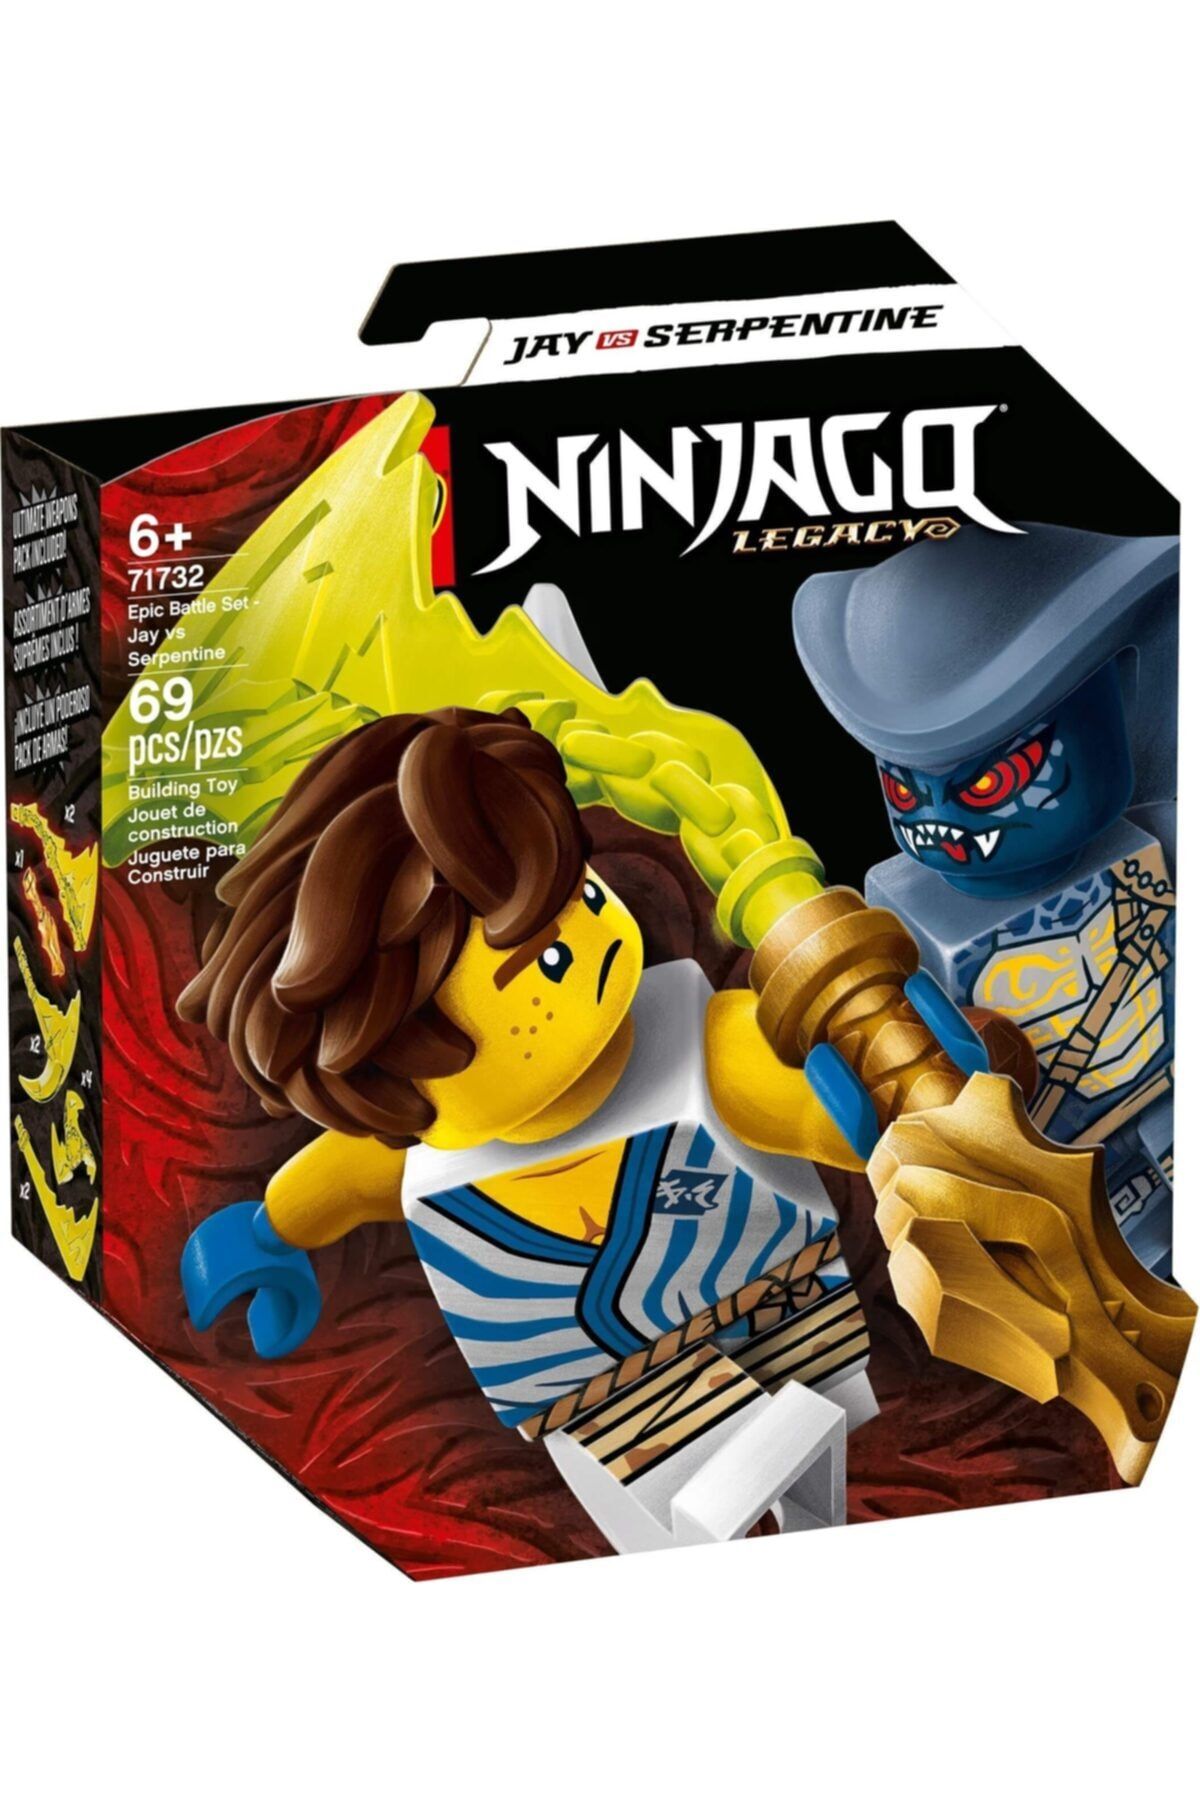 LEGO Ninjago 71732 Jay Vs Serpentine